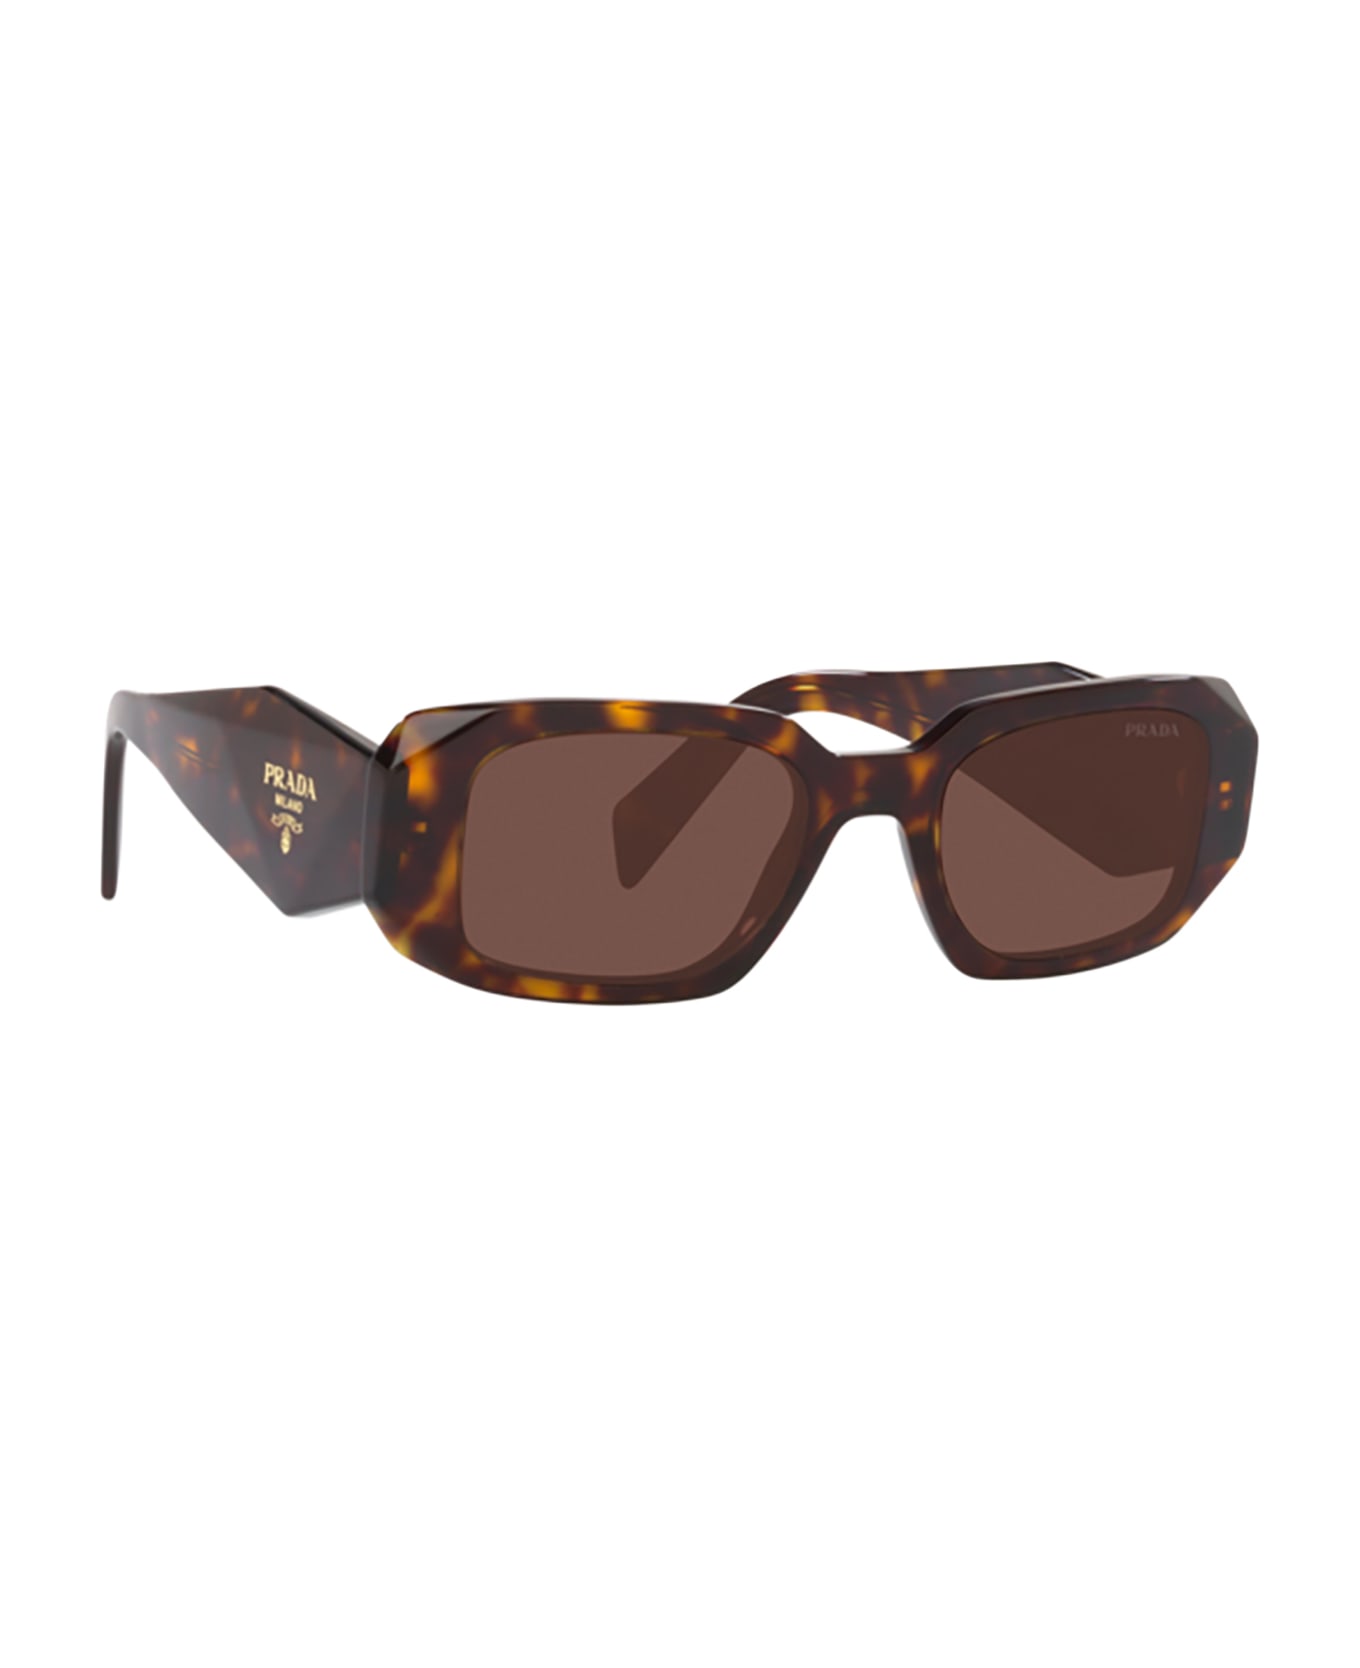 Prada Eyewear Pr 17ws Tortoise Sunglasses - Tortoise